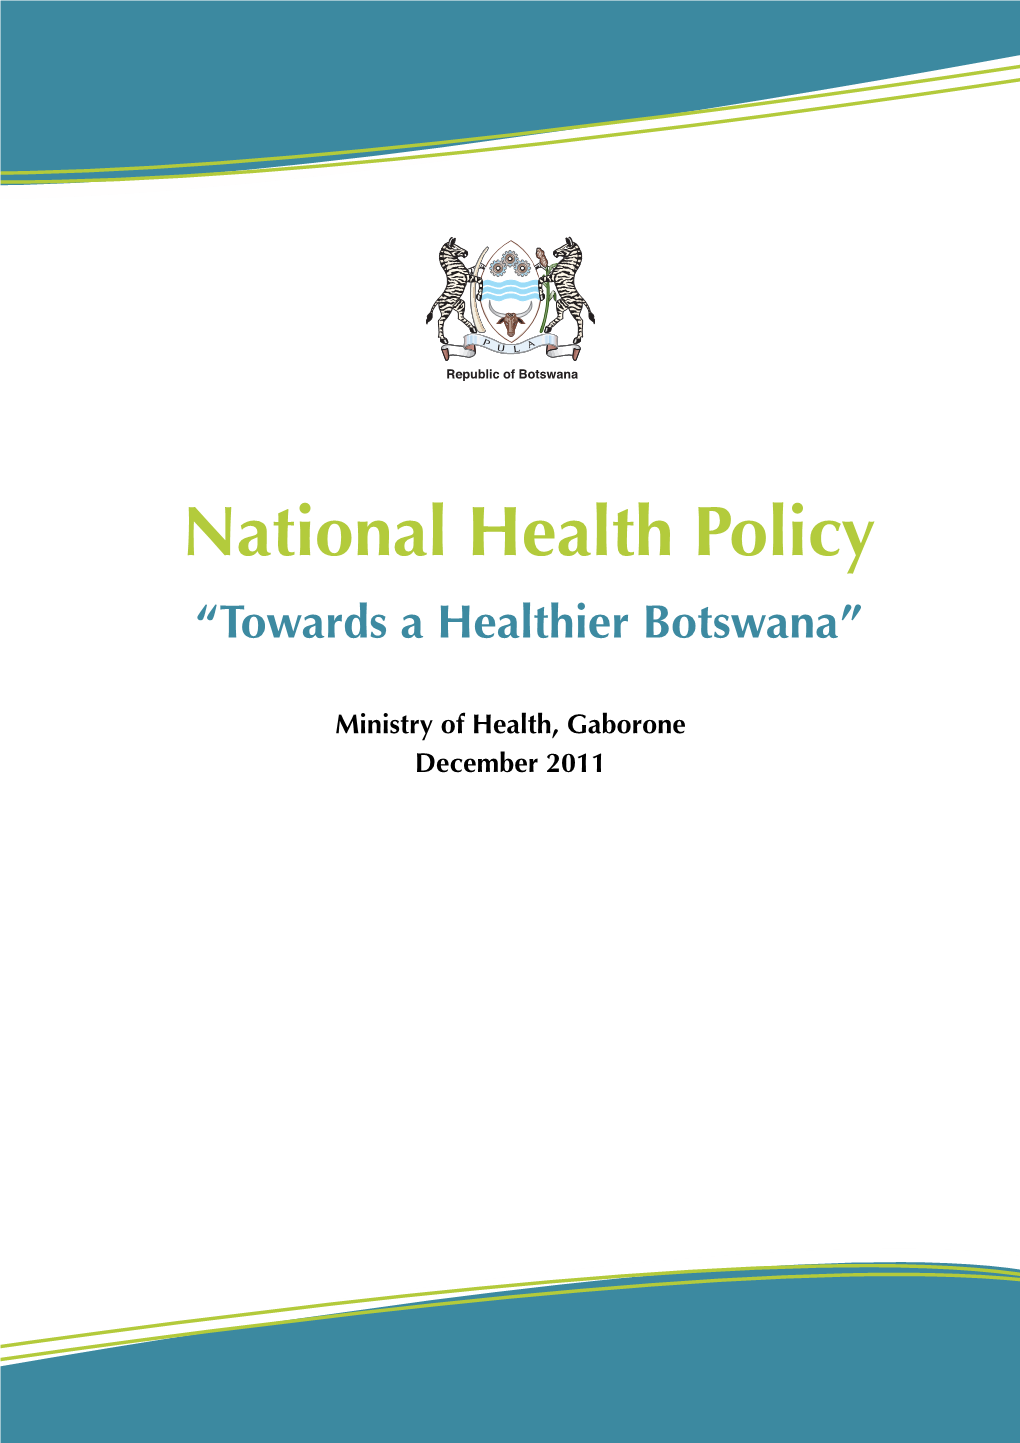 National Health Policy “Towards a Healthier Botswana”